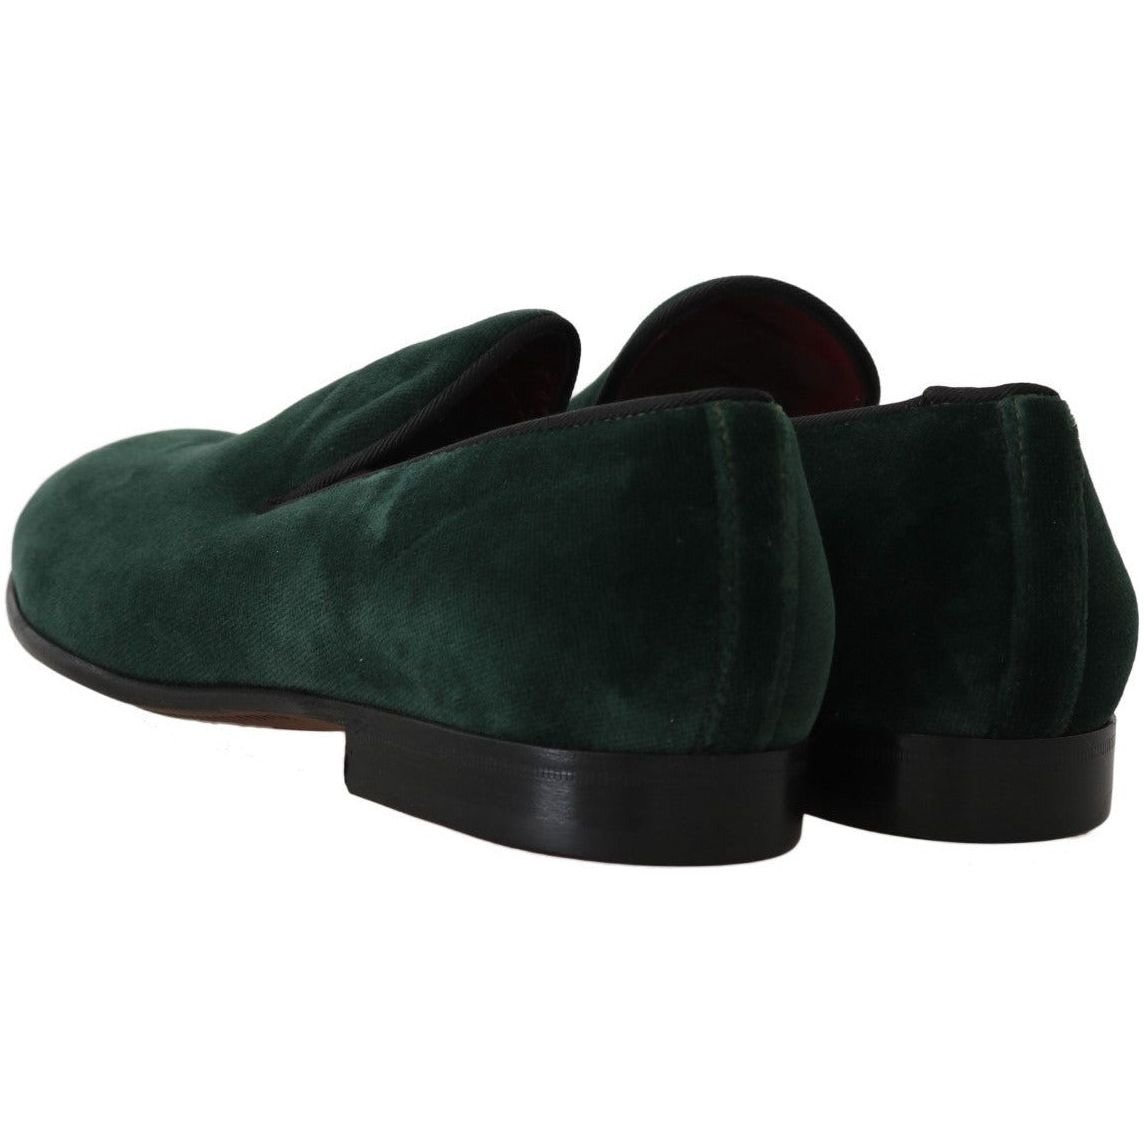 Dolce & Gabbana Elegant Green Suede Slip-On Loafers green-suede-leather-slippers-loafers 550450-green-suede-leather-slippers-loafers-4_f46848b4-107b-4b93-bd8f-e6d138c70bcf.jpg